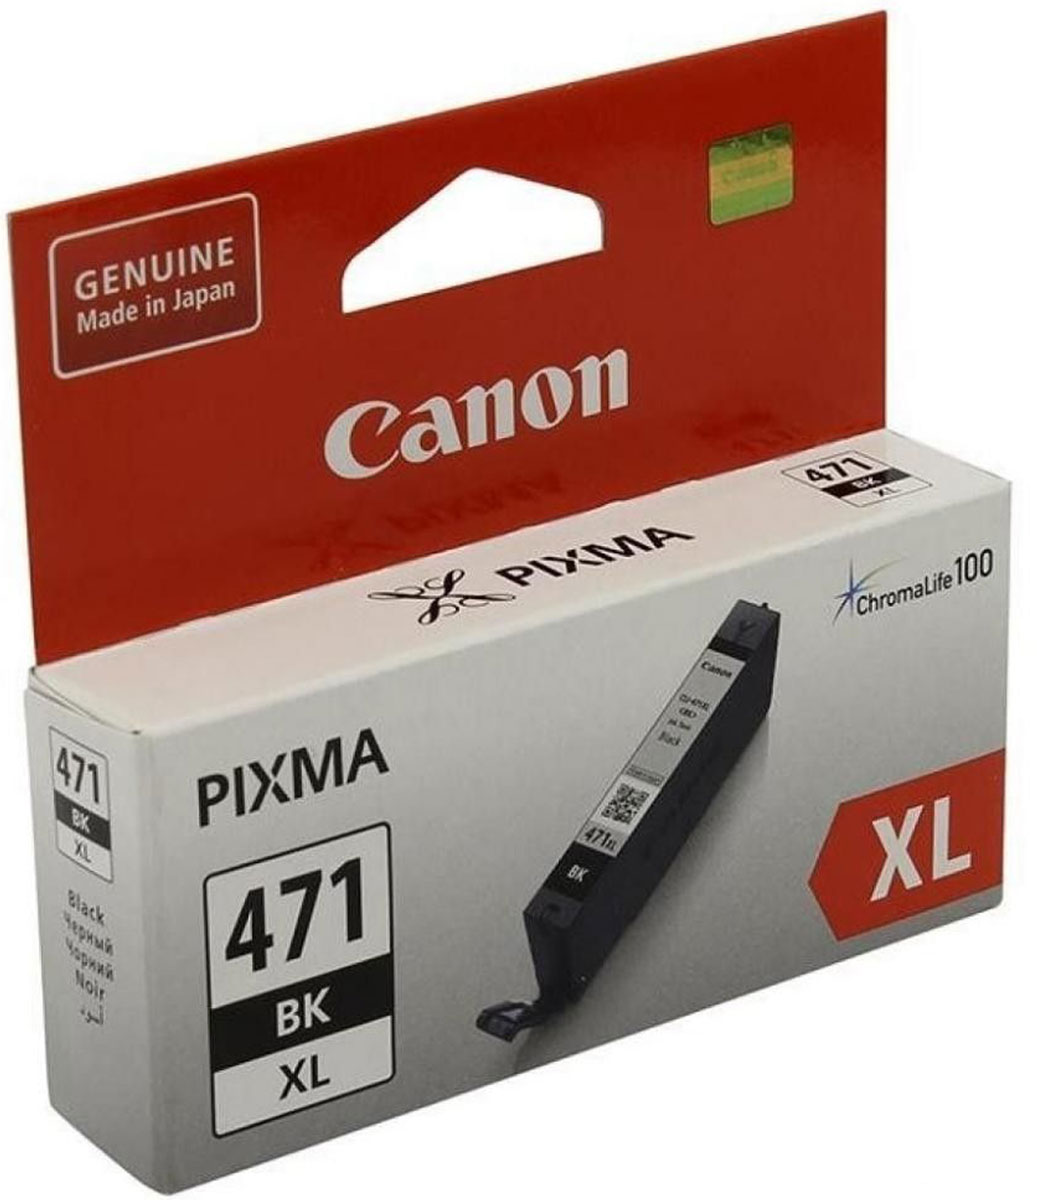 Canon CLI-471XL, Black картридж для MG5740/MG6840/MG7740/TS8040/TS9040/TS5040/TS6040